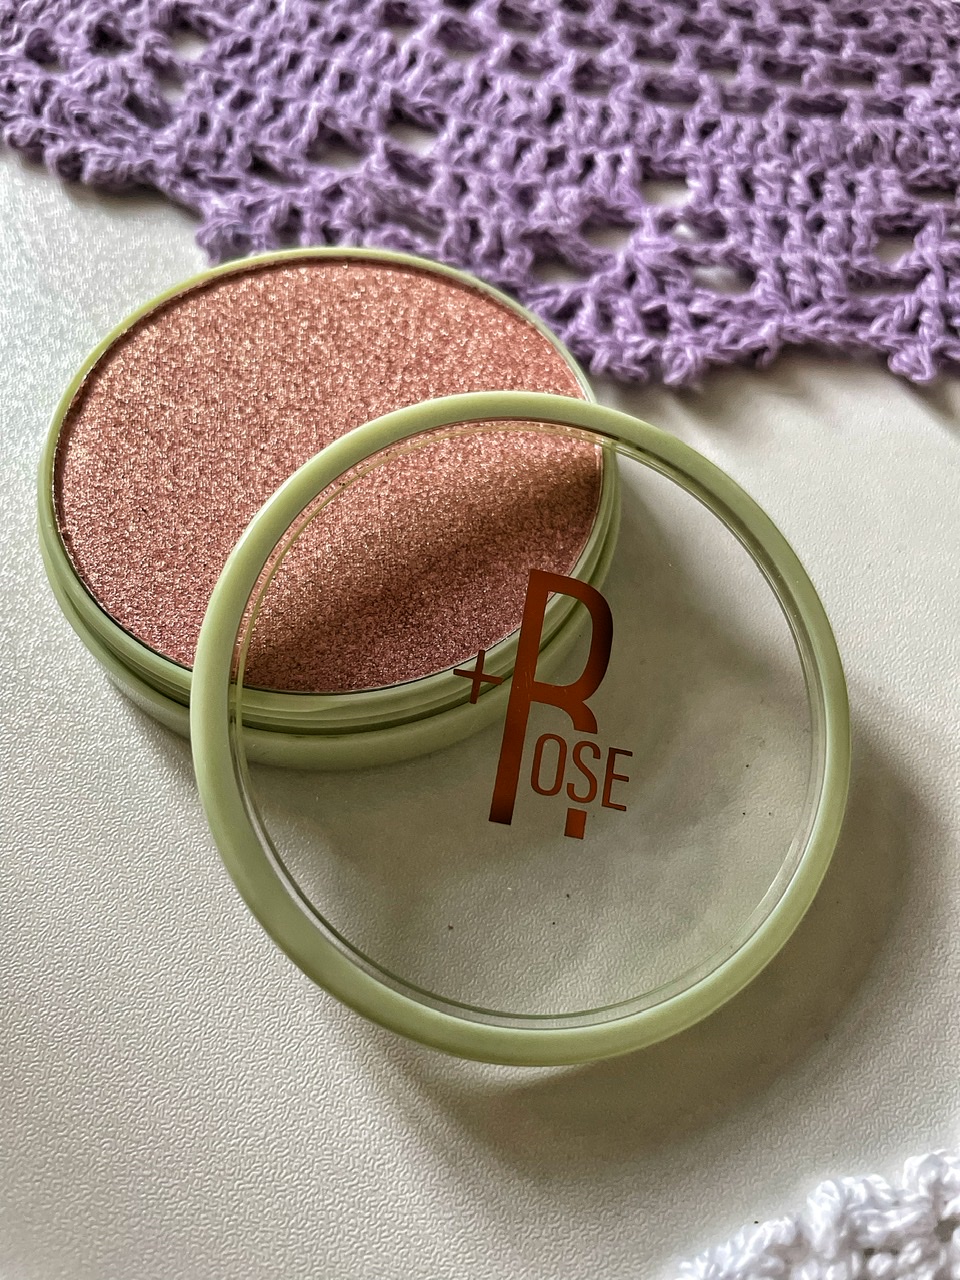 Rose Pixi beauty: la linea lenitiva che nutre ed equilibra le pelli più sensibili